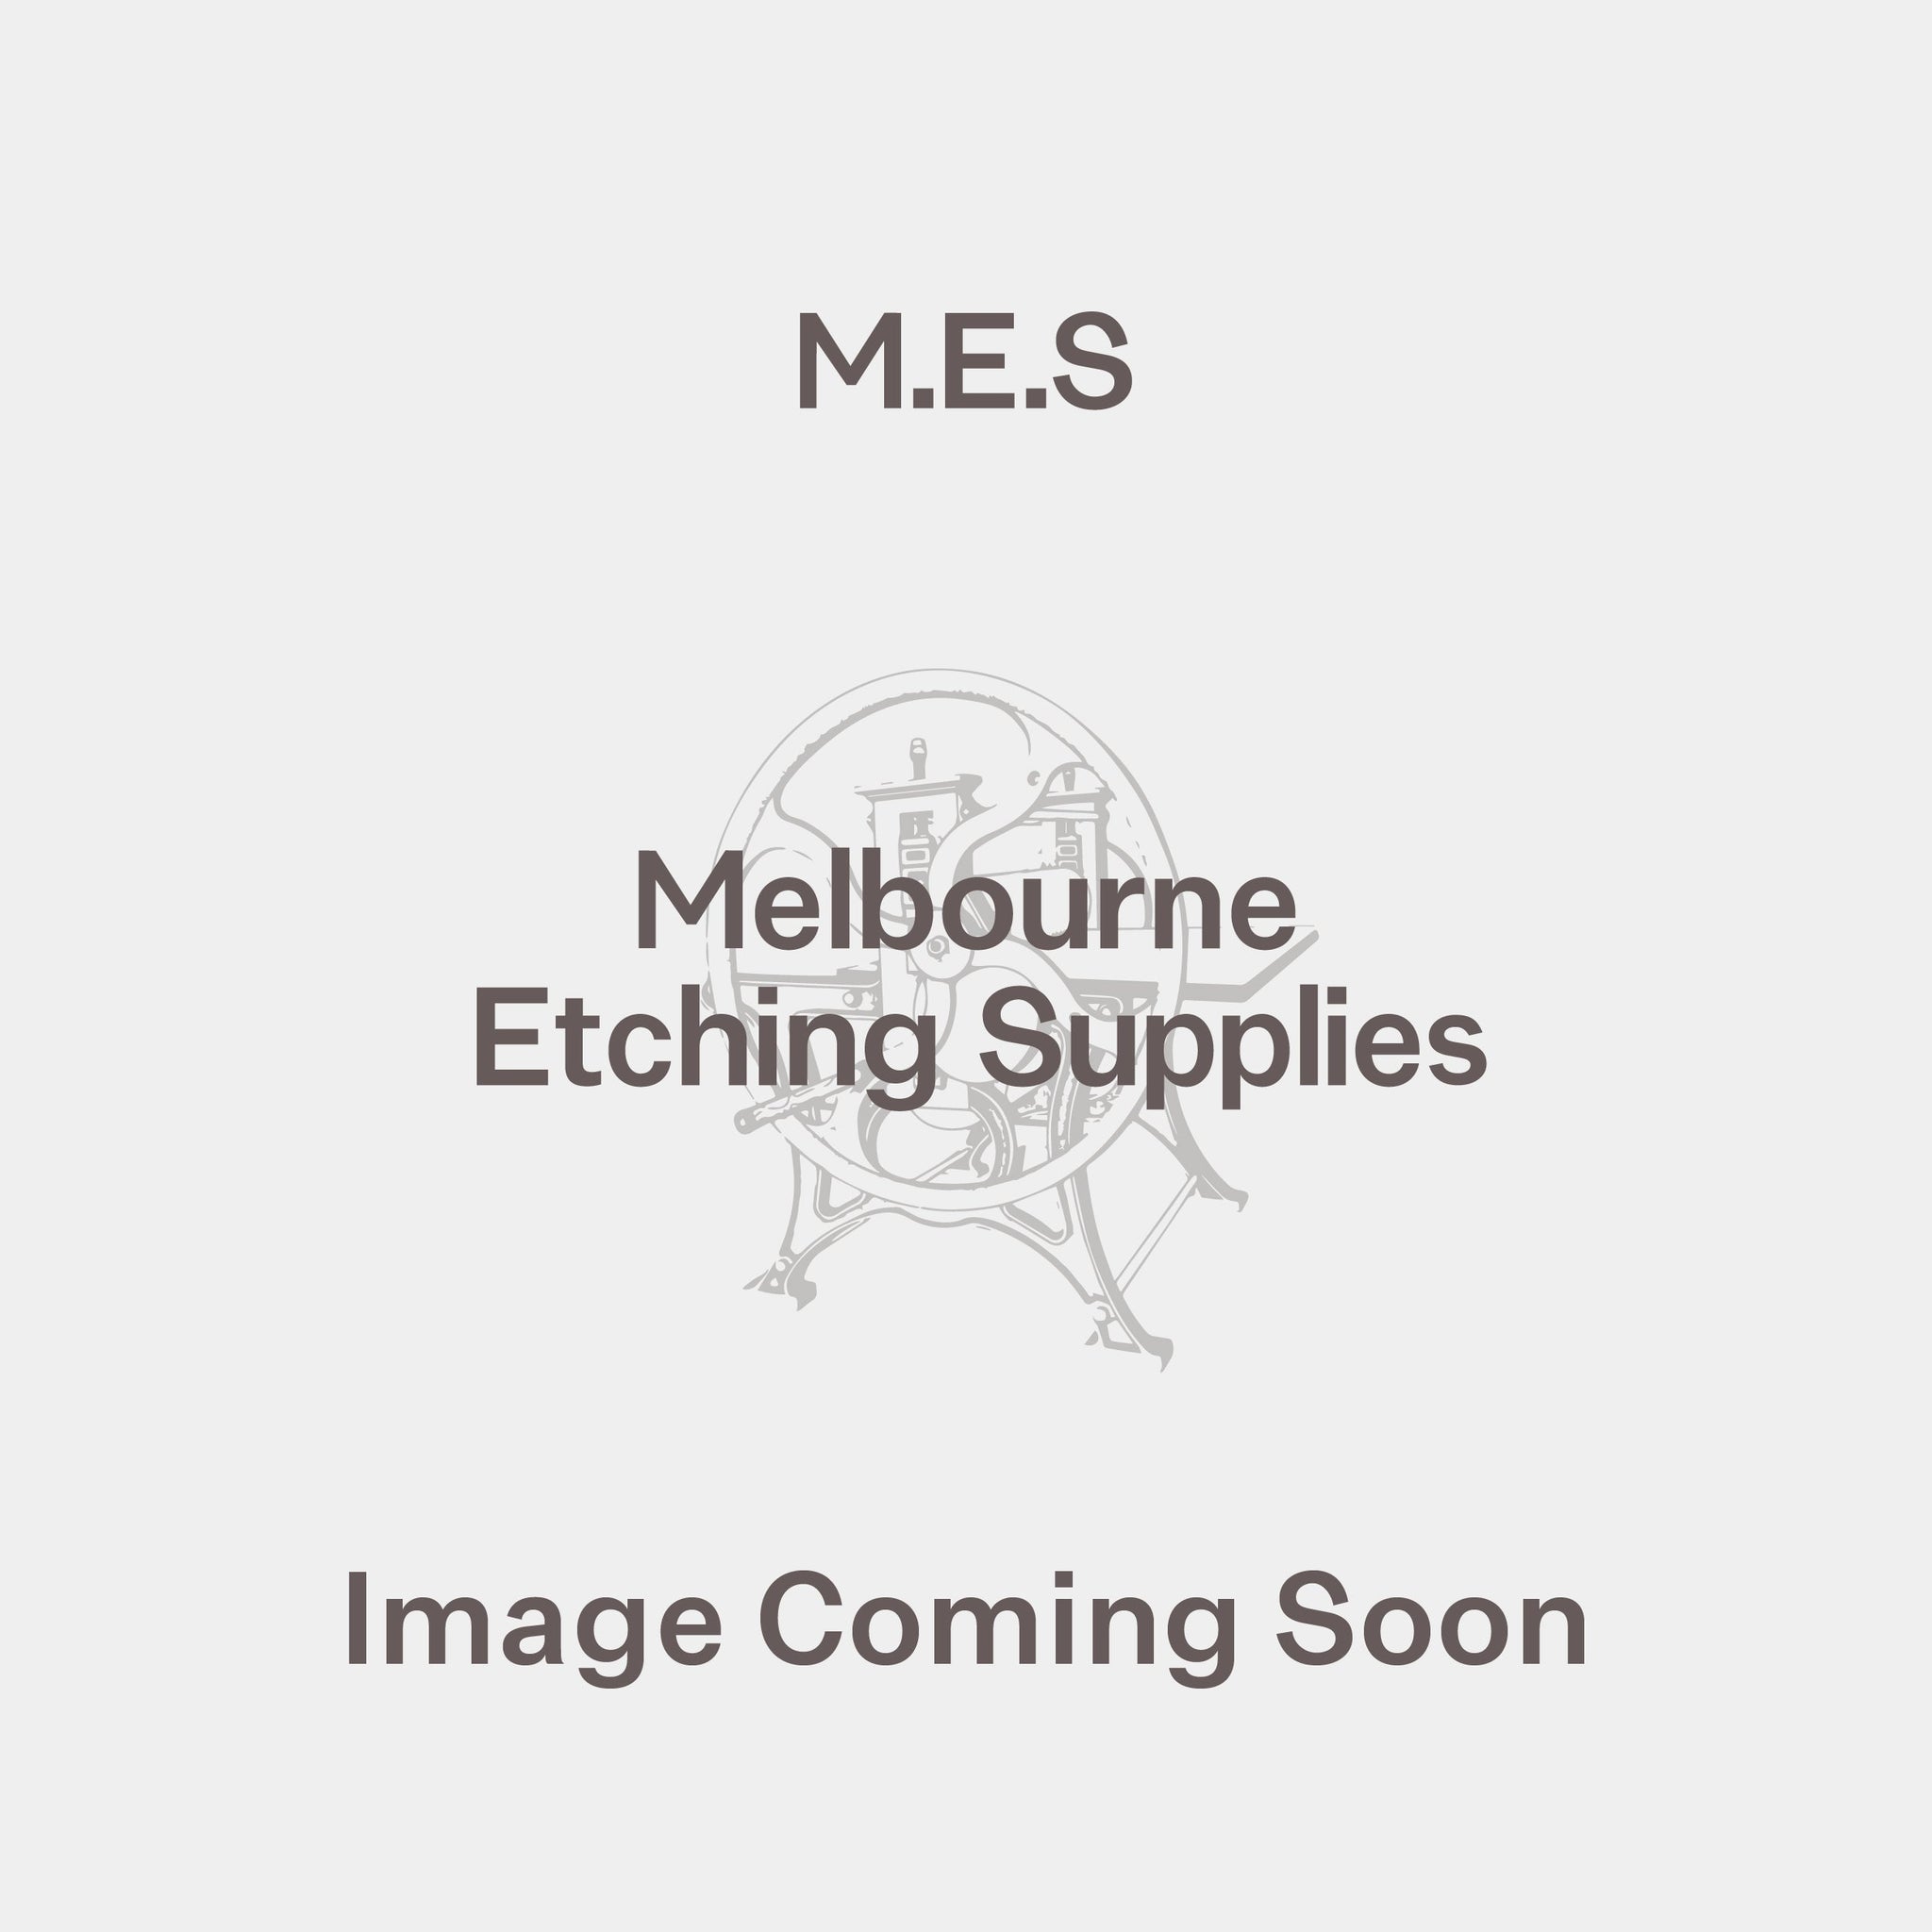 Pronto Plates - Melbourne Etching Supplies